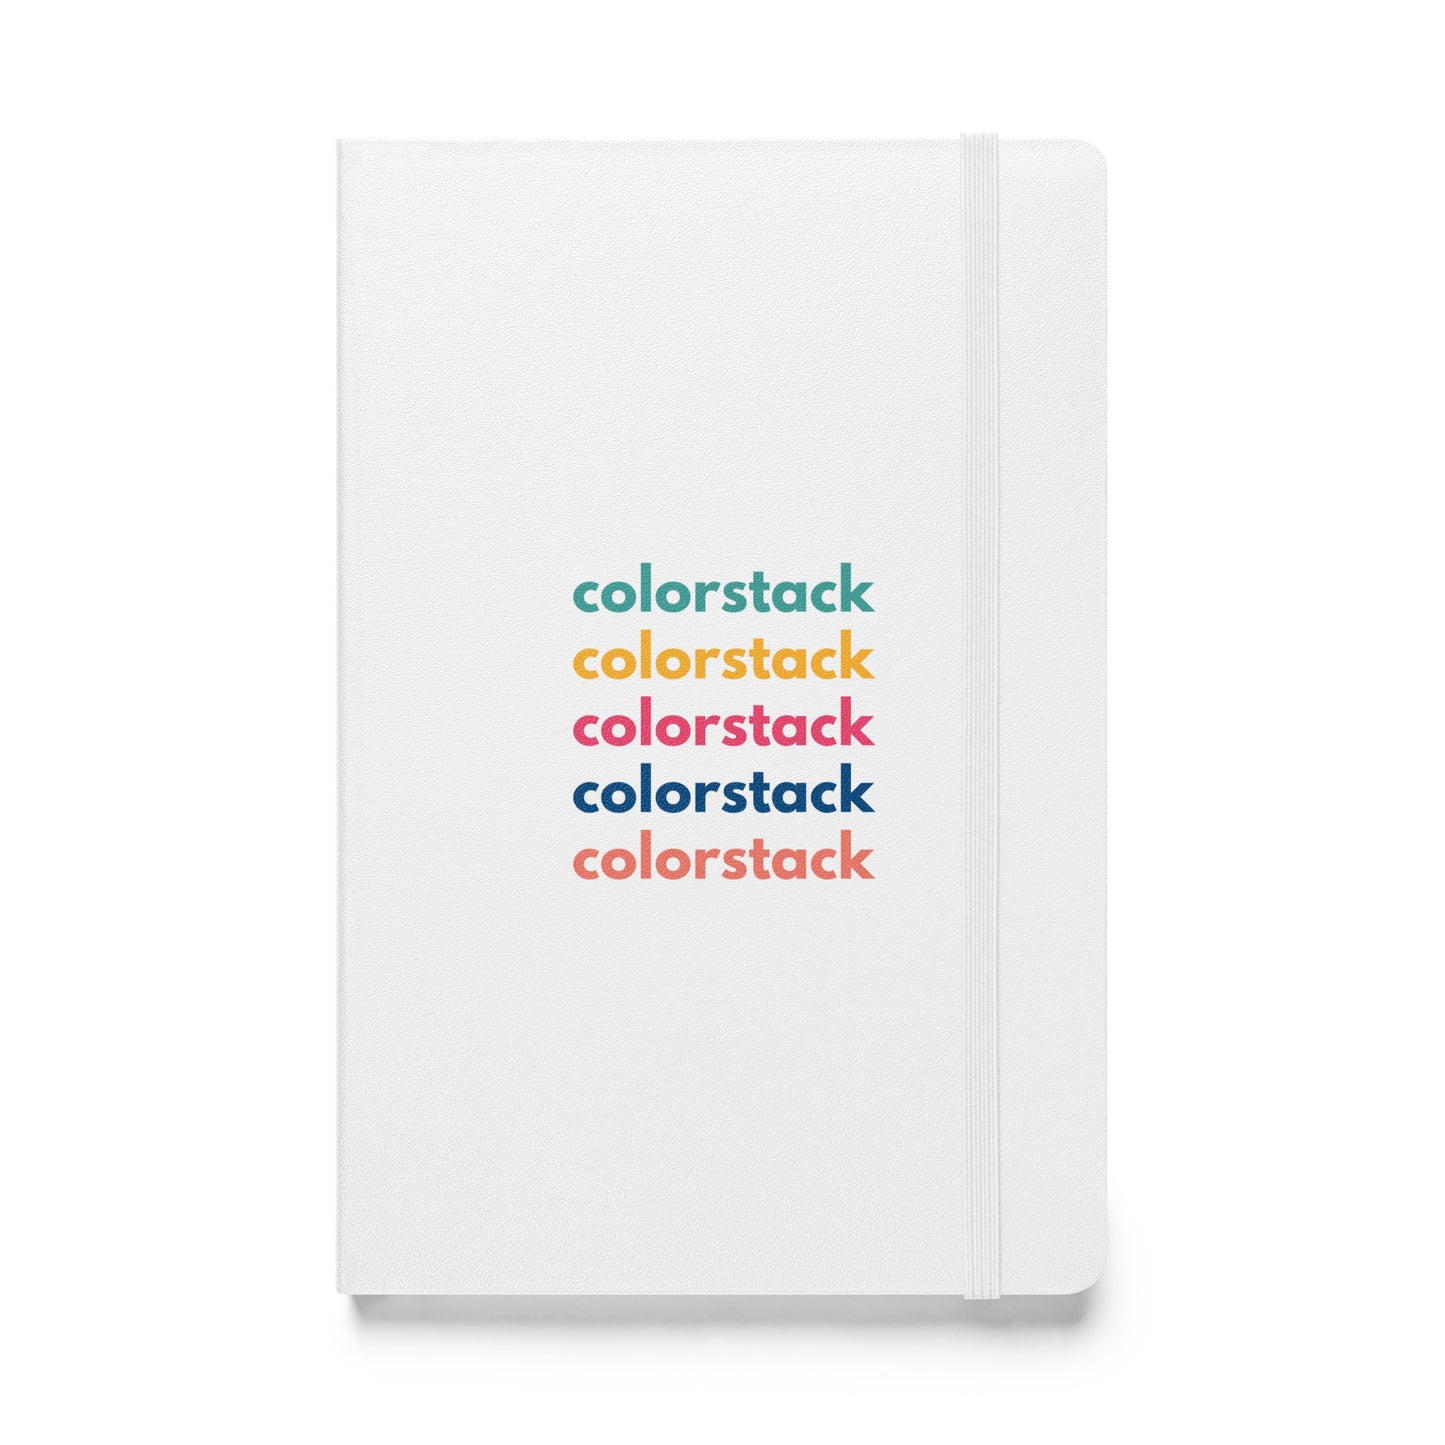 ColorStack Hardcover Bound Notebook